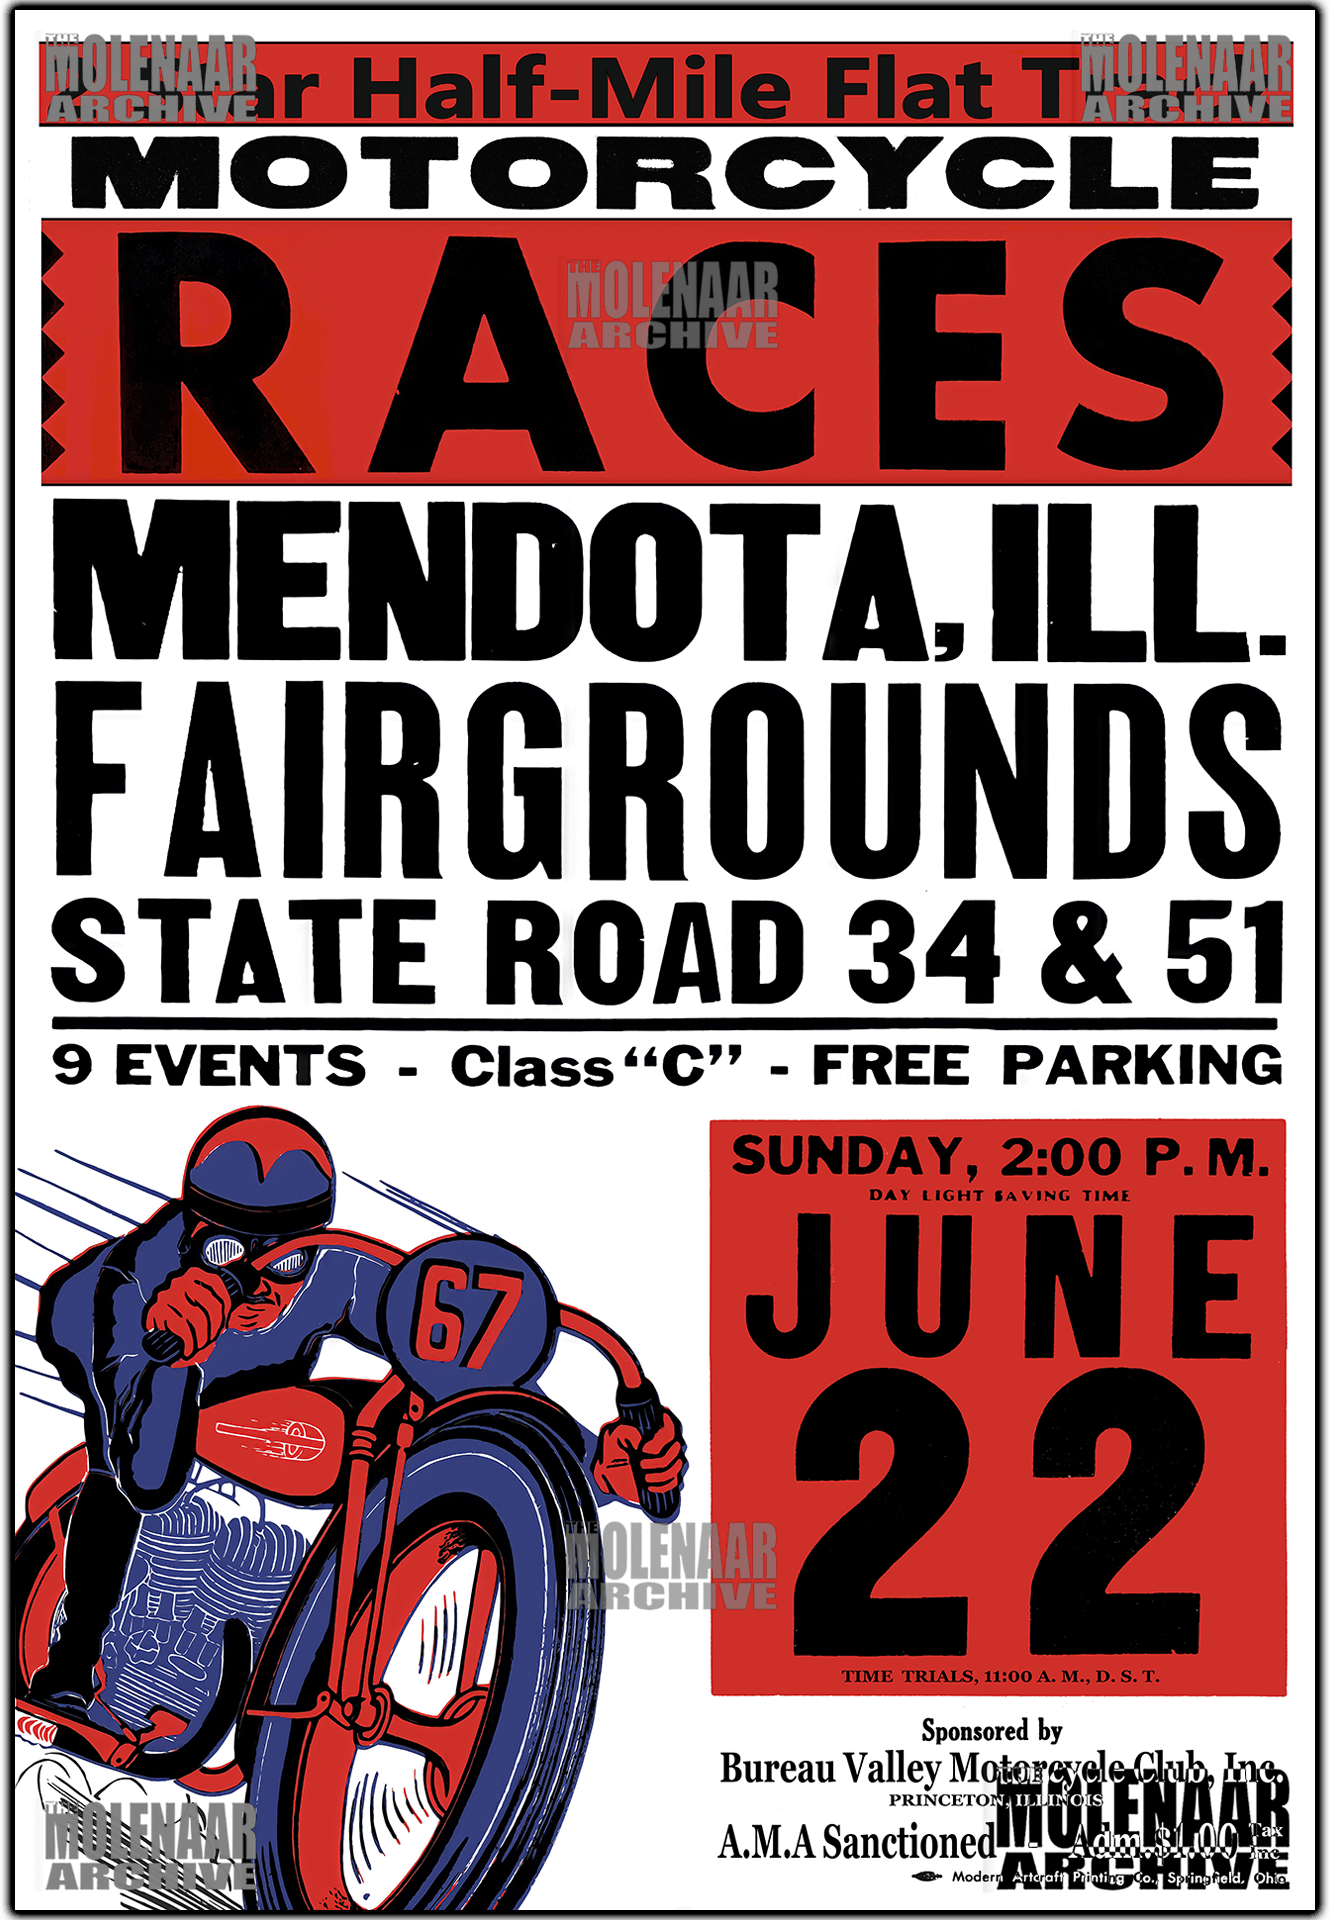 Vintage Harley Motorcycle Poster Mendota, IL Fairgrounds 2 Star Flat